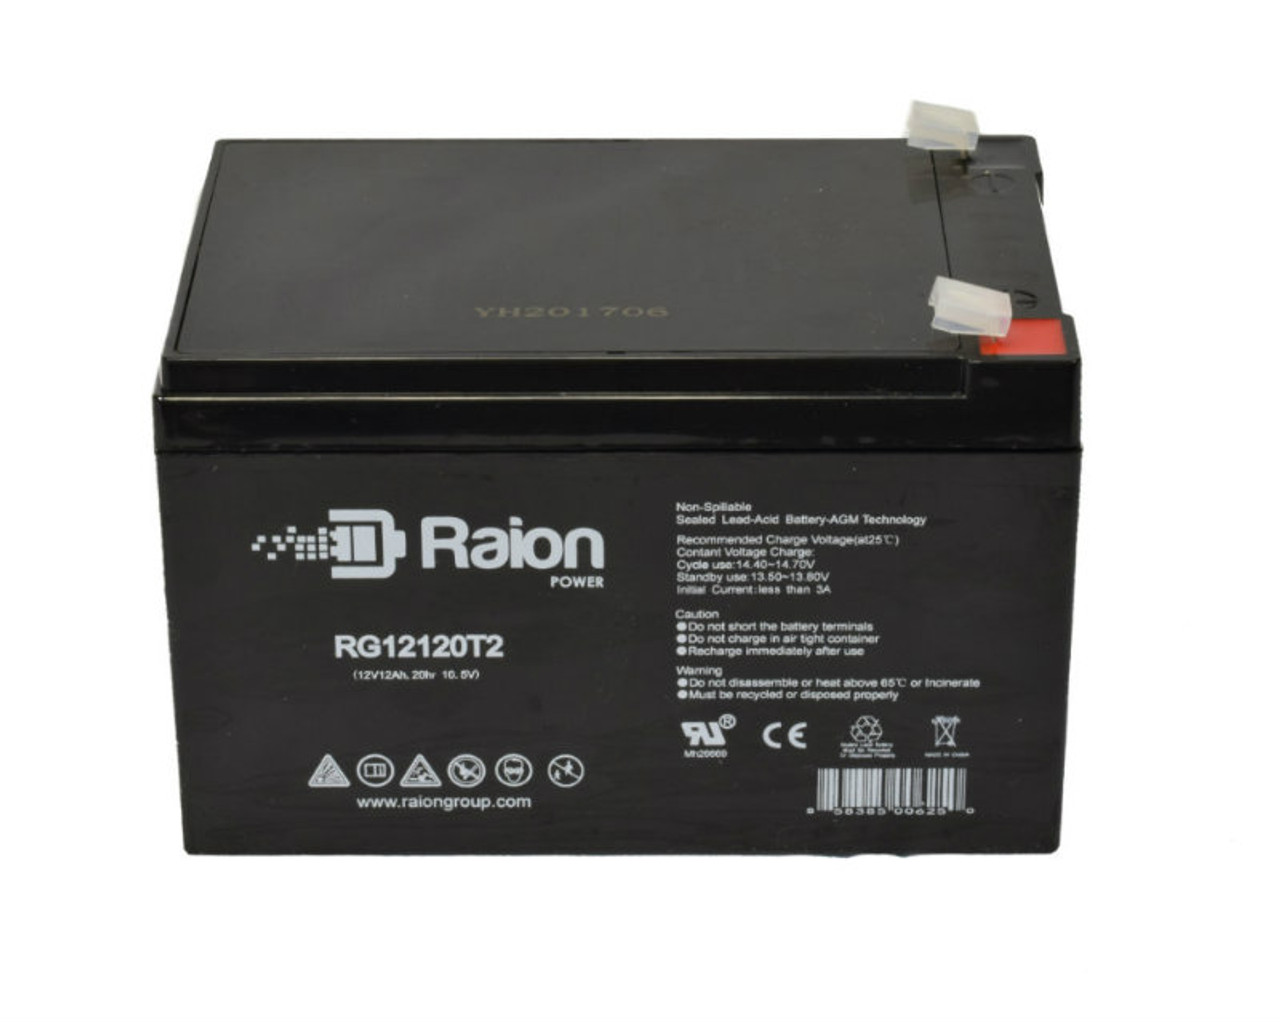 Raion Power RG12120T2 SLA Battery for Toyo Battery 6FM12